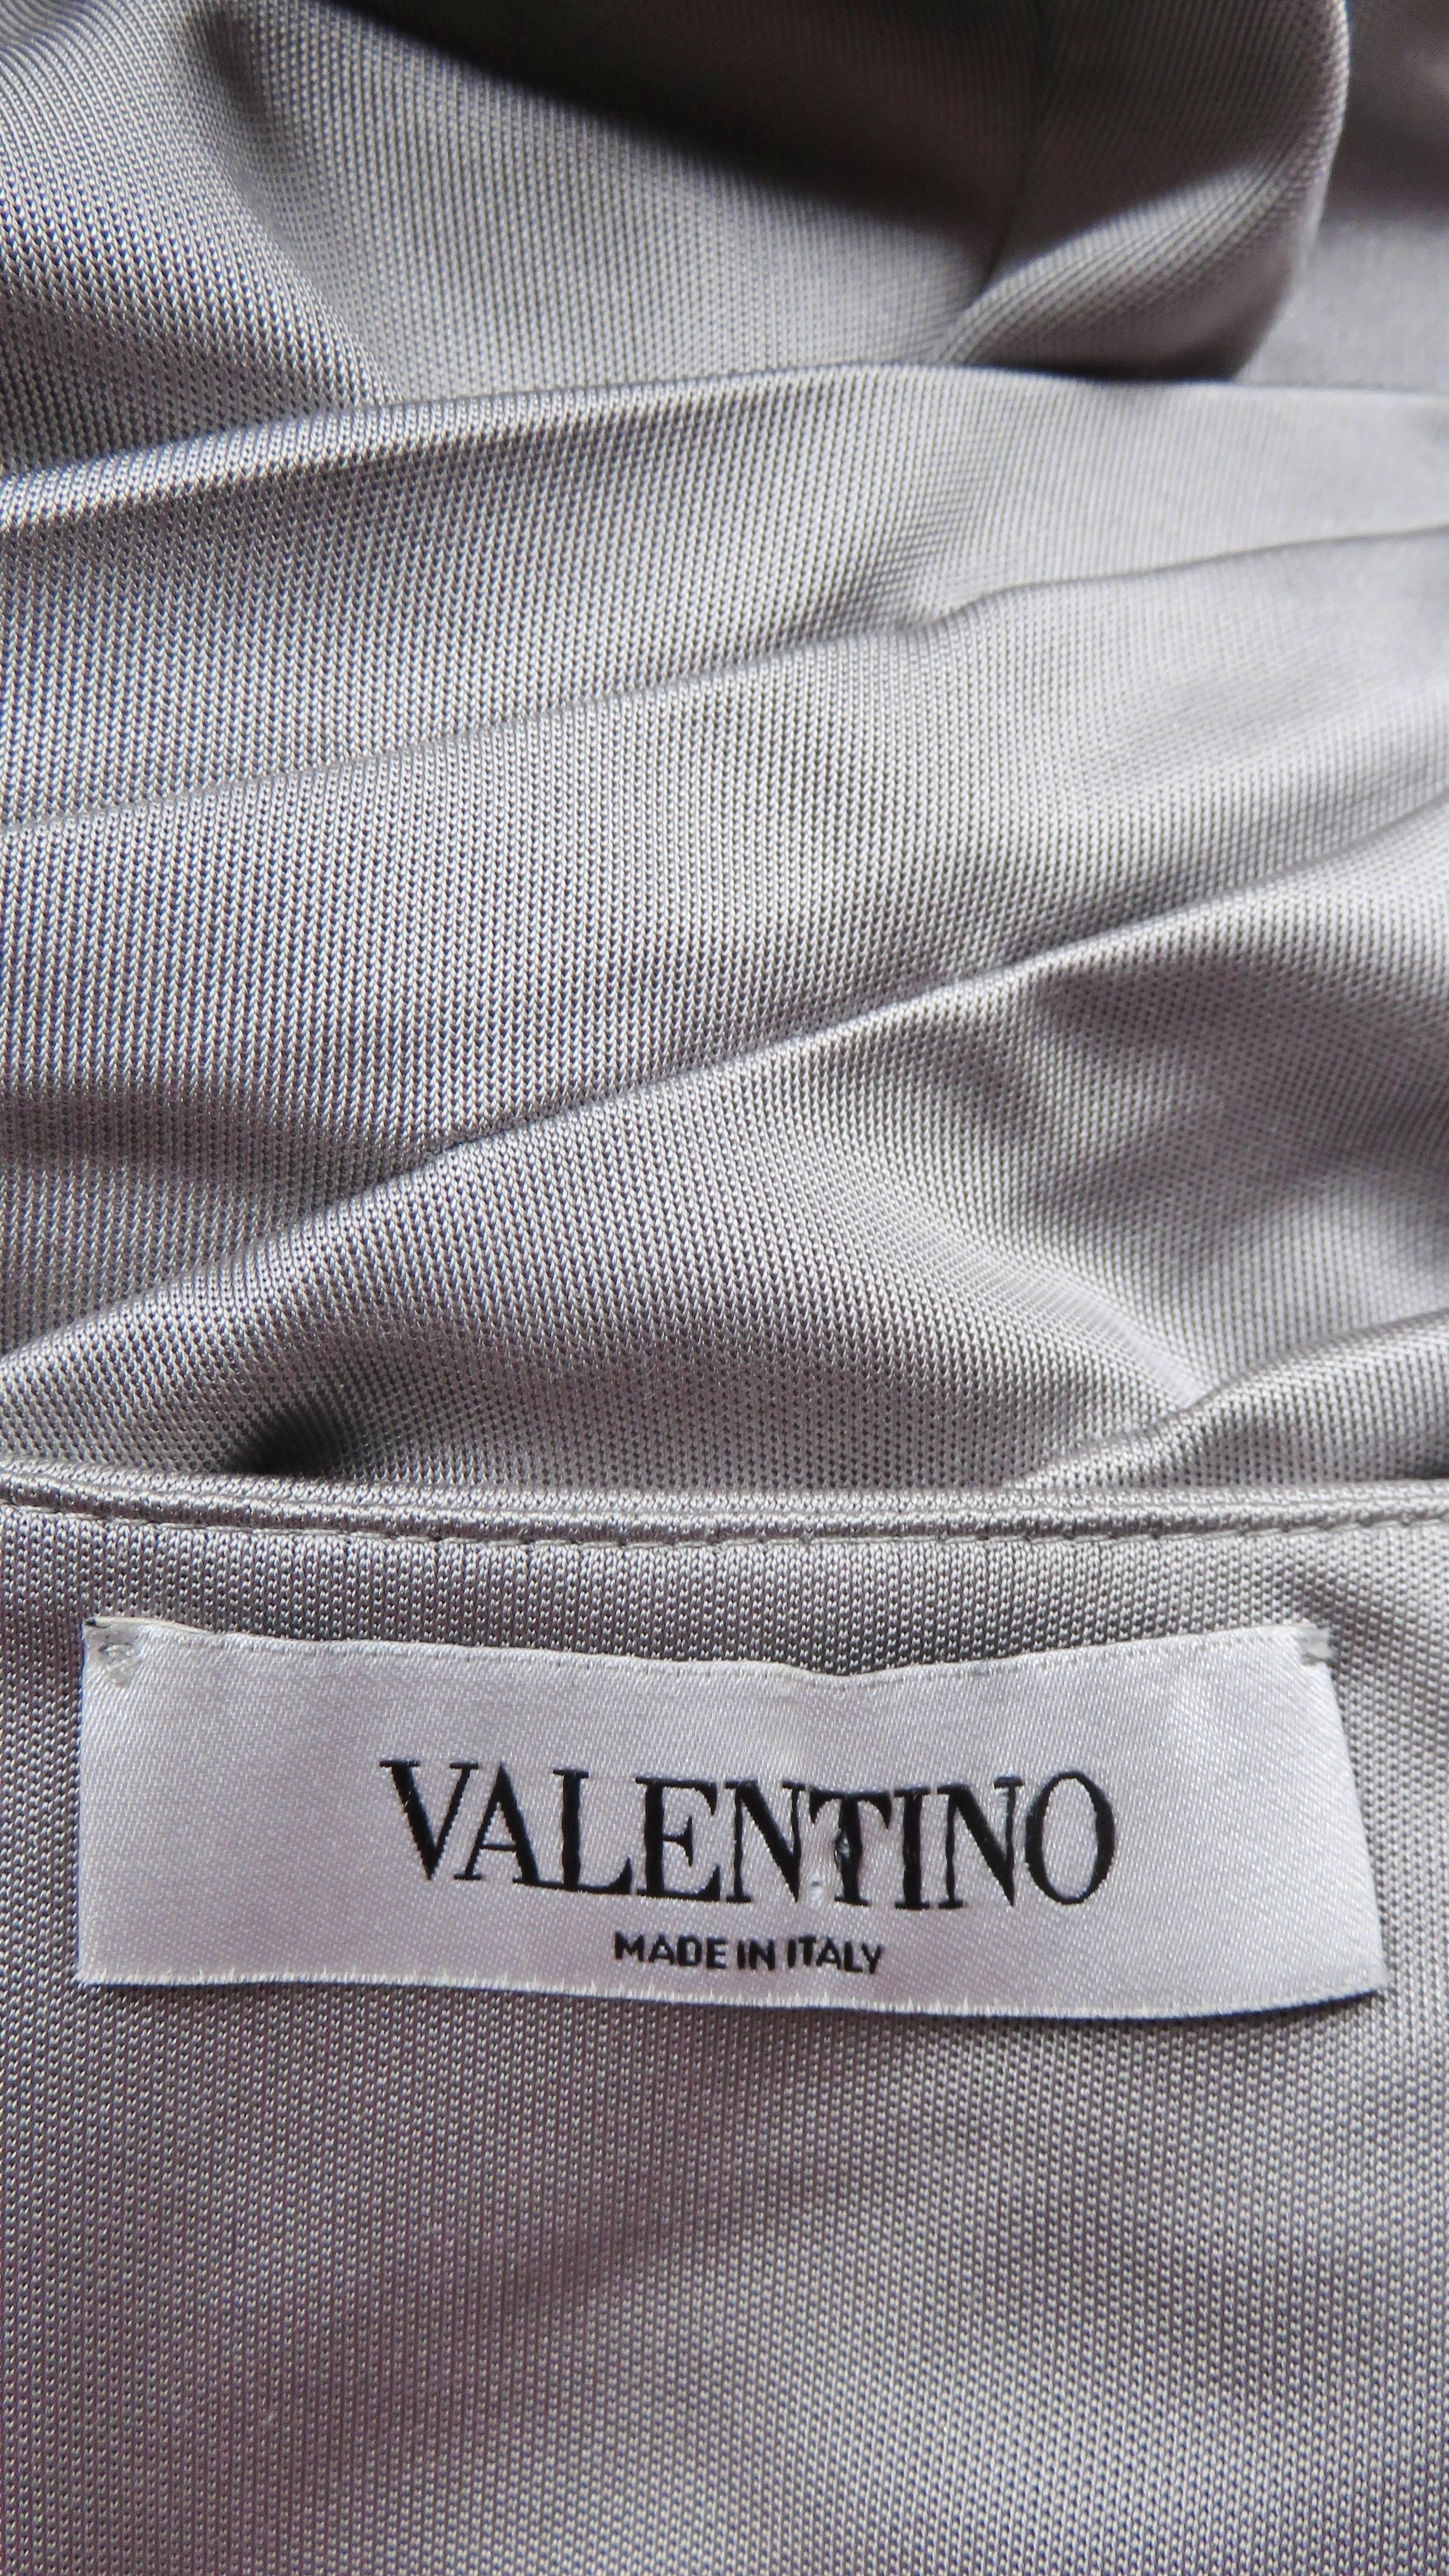 Valentino Silk Jersey Bodycon Dress For Sale 7